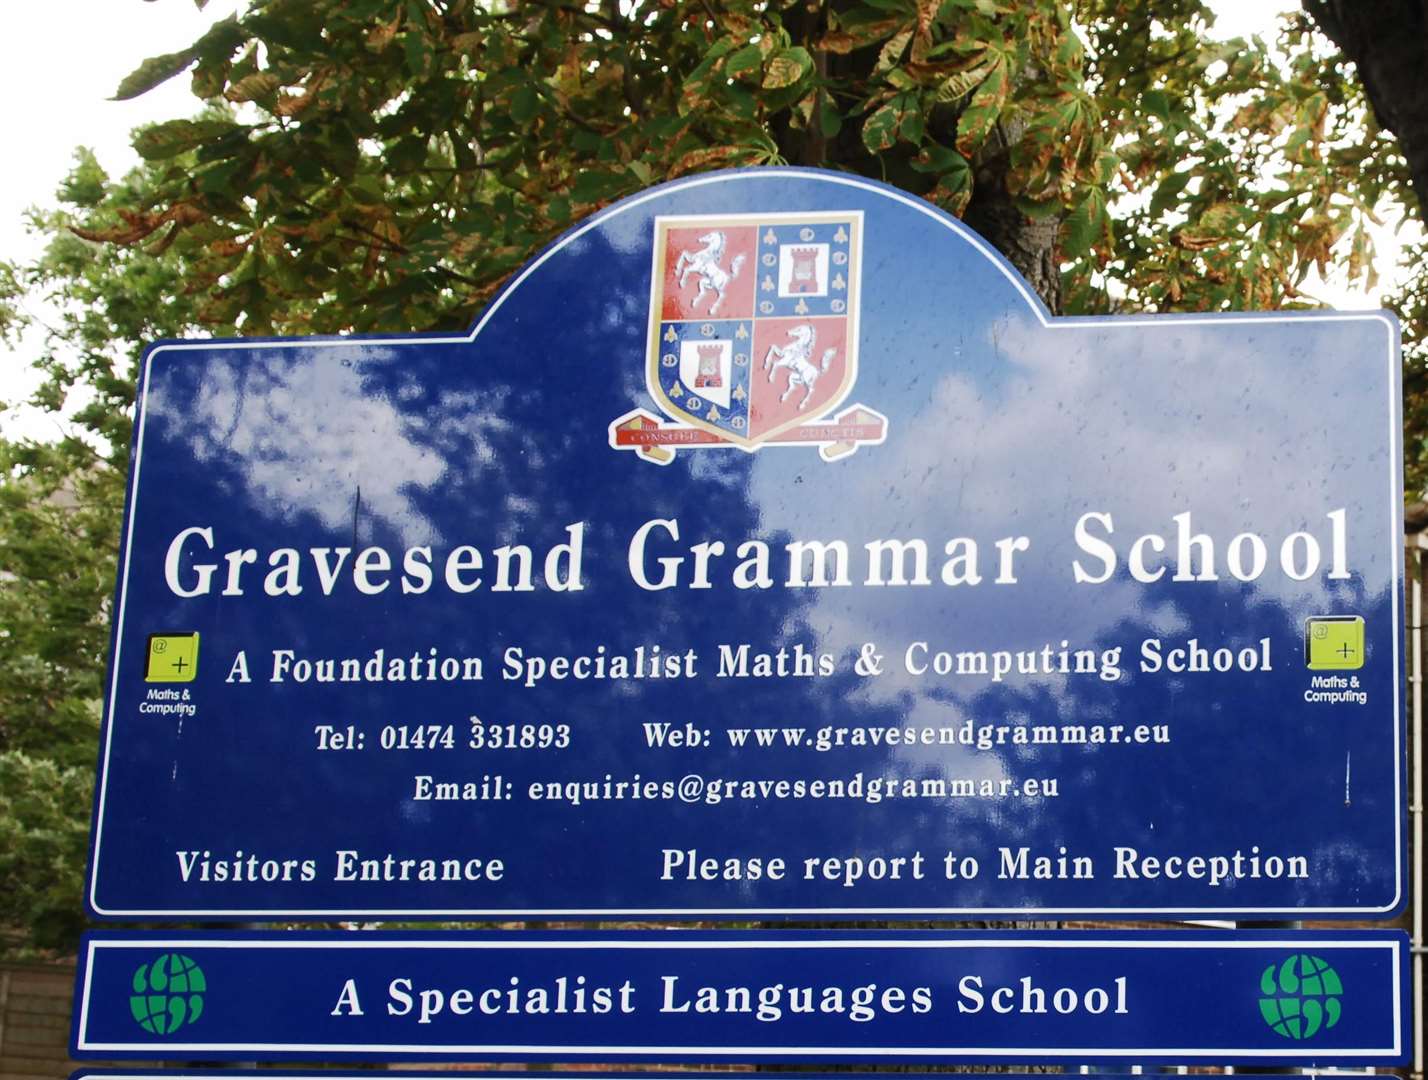 Gravesend Grammar School is expanding